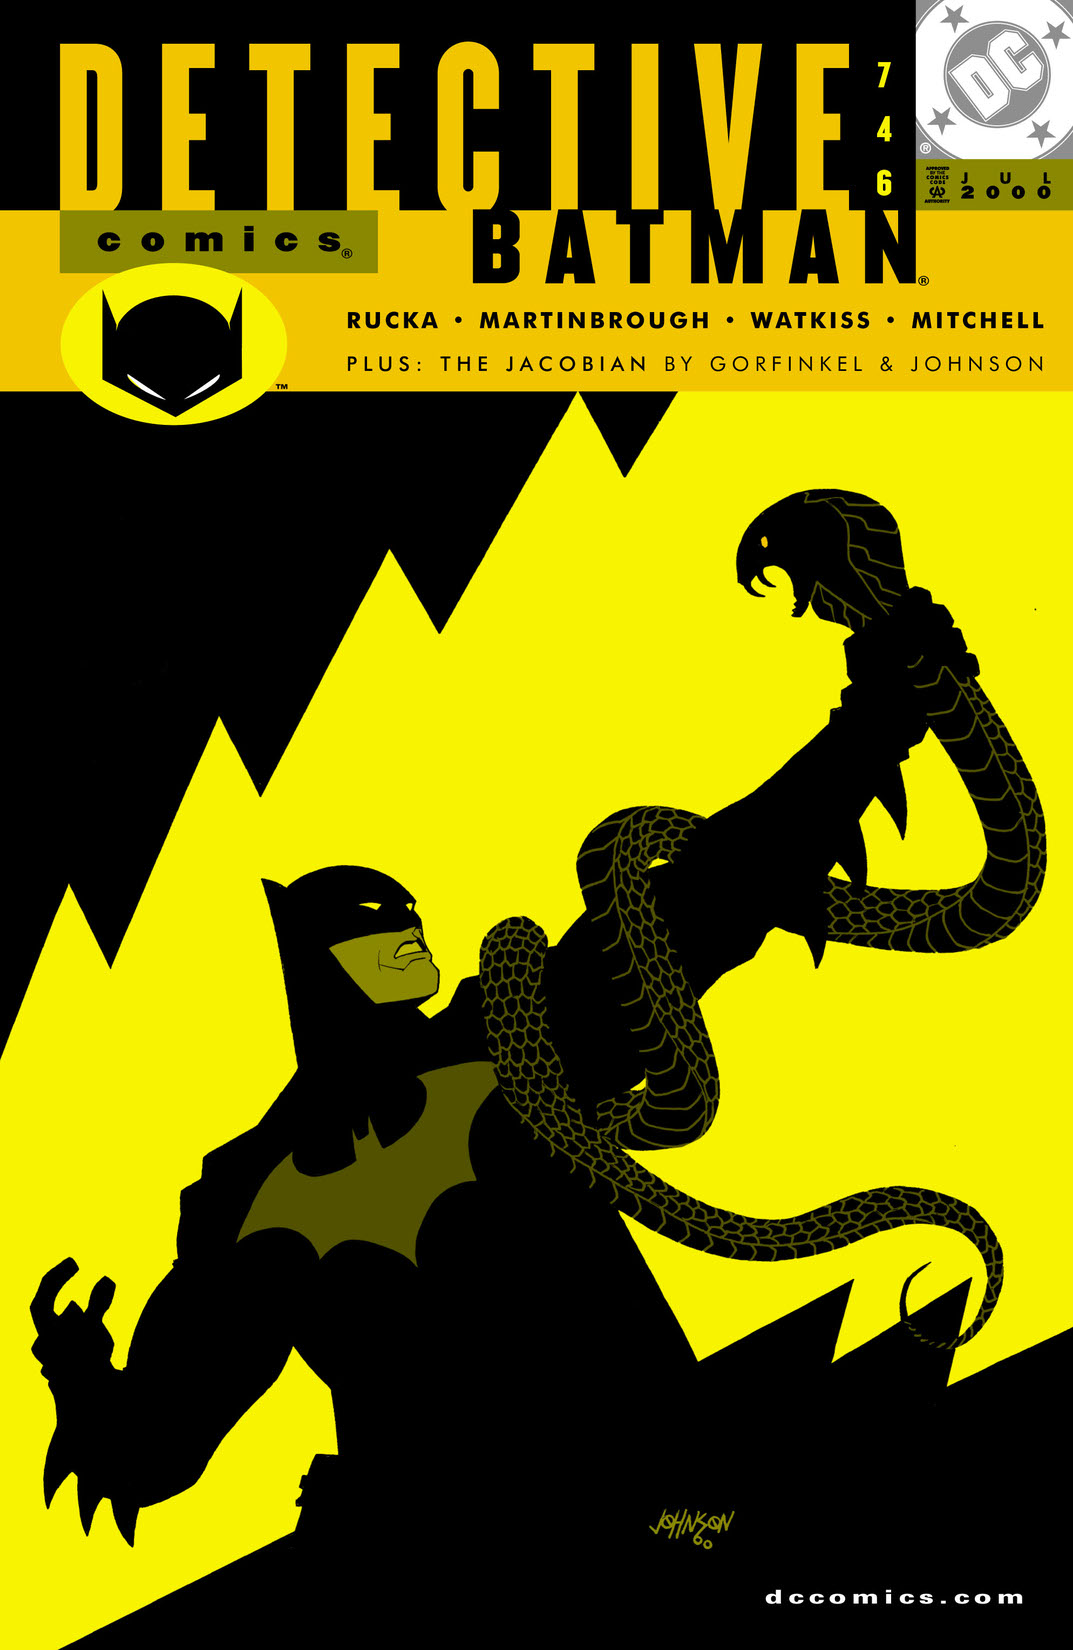 Detective Comics (1937-) #746 preview images